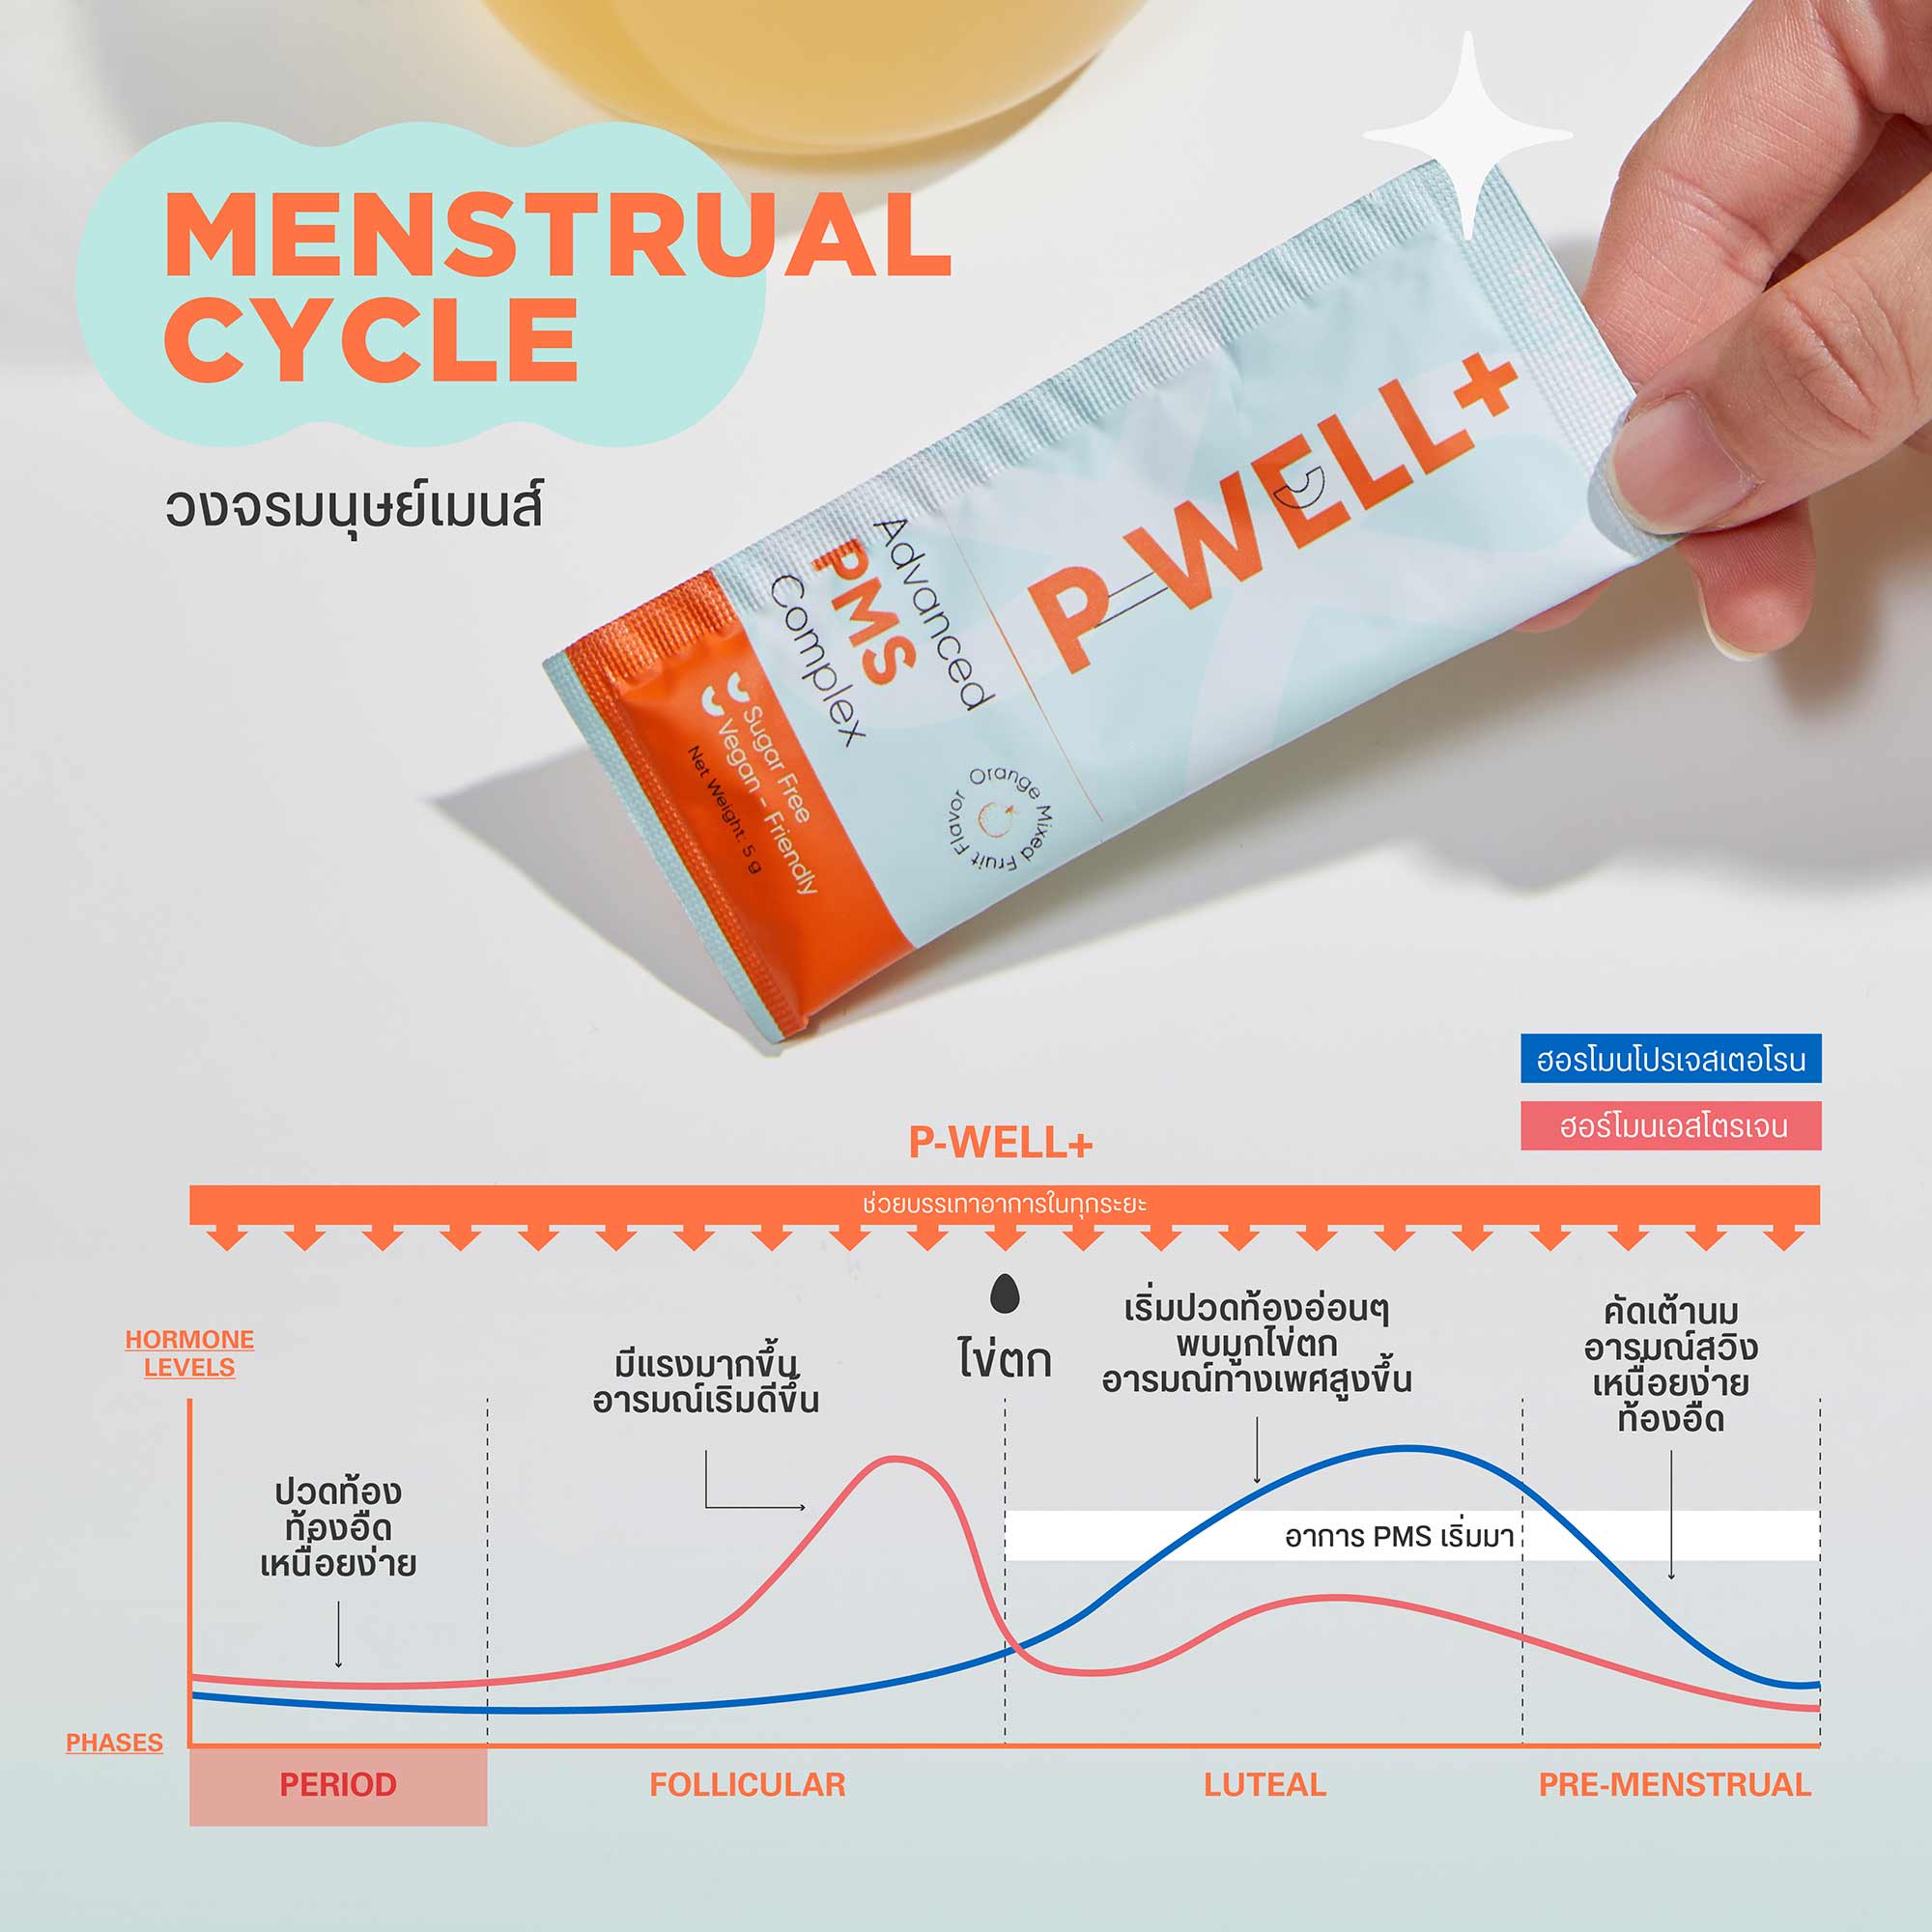 Menstrual Cycle ระยะประจำเดือน